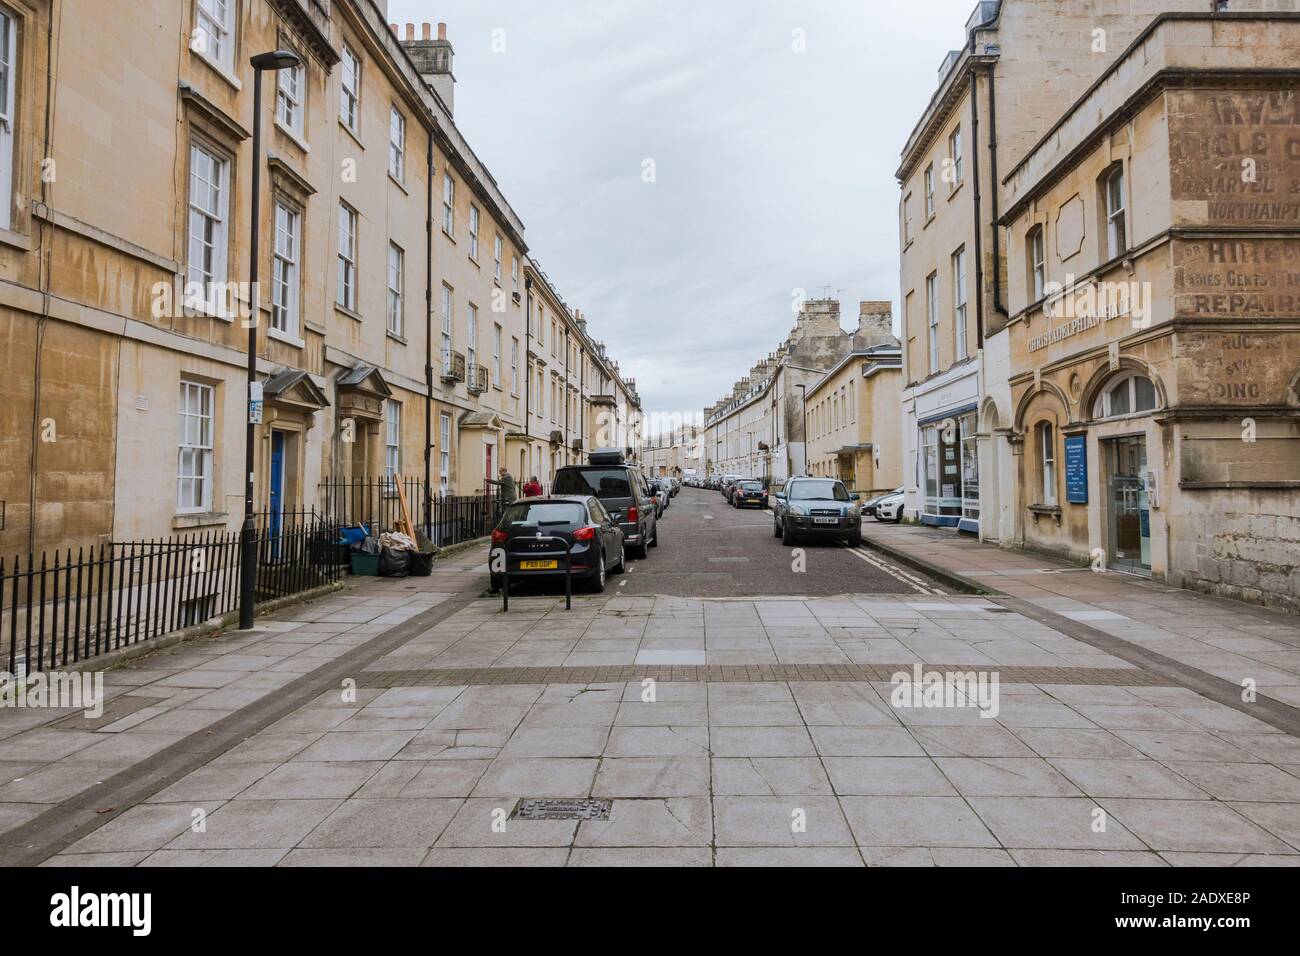 View of New King Street, town center, Bath, Somerset, UK Stock Photo